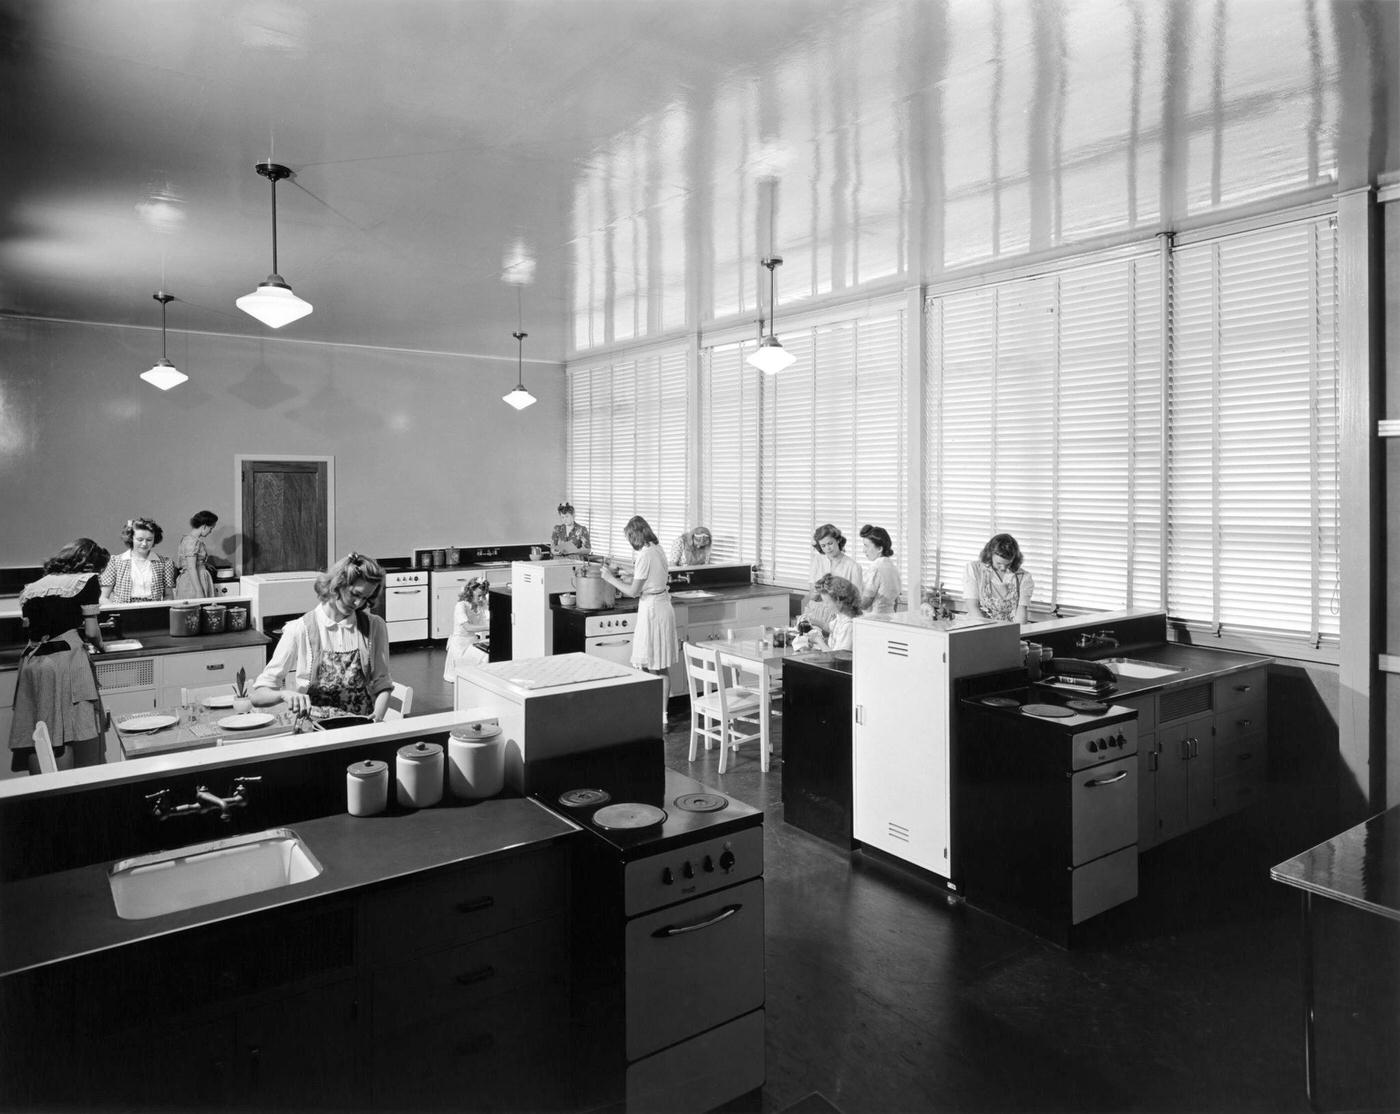 Home Economics Class at Oak Ridge High School, Tennessee, 1944.